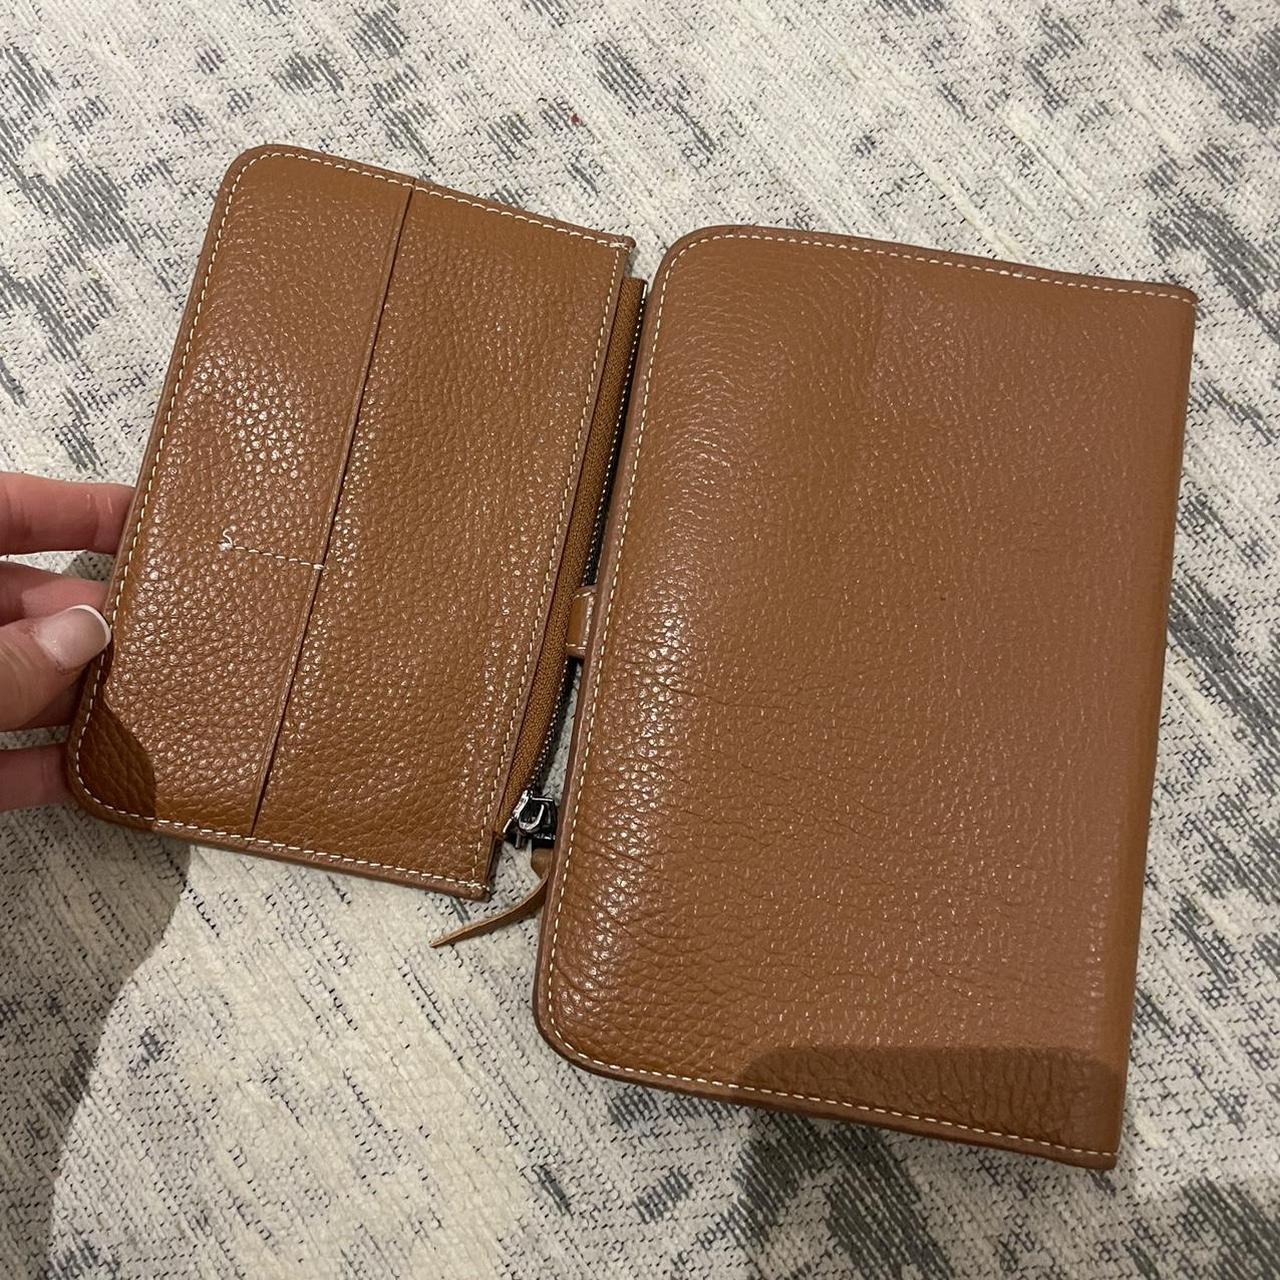 Hermes brown leather purse and card holder - Depop